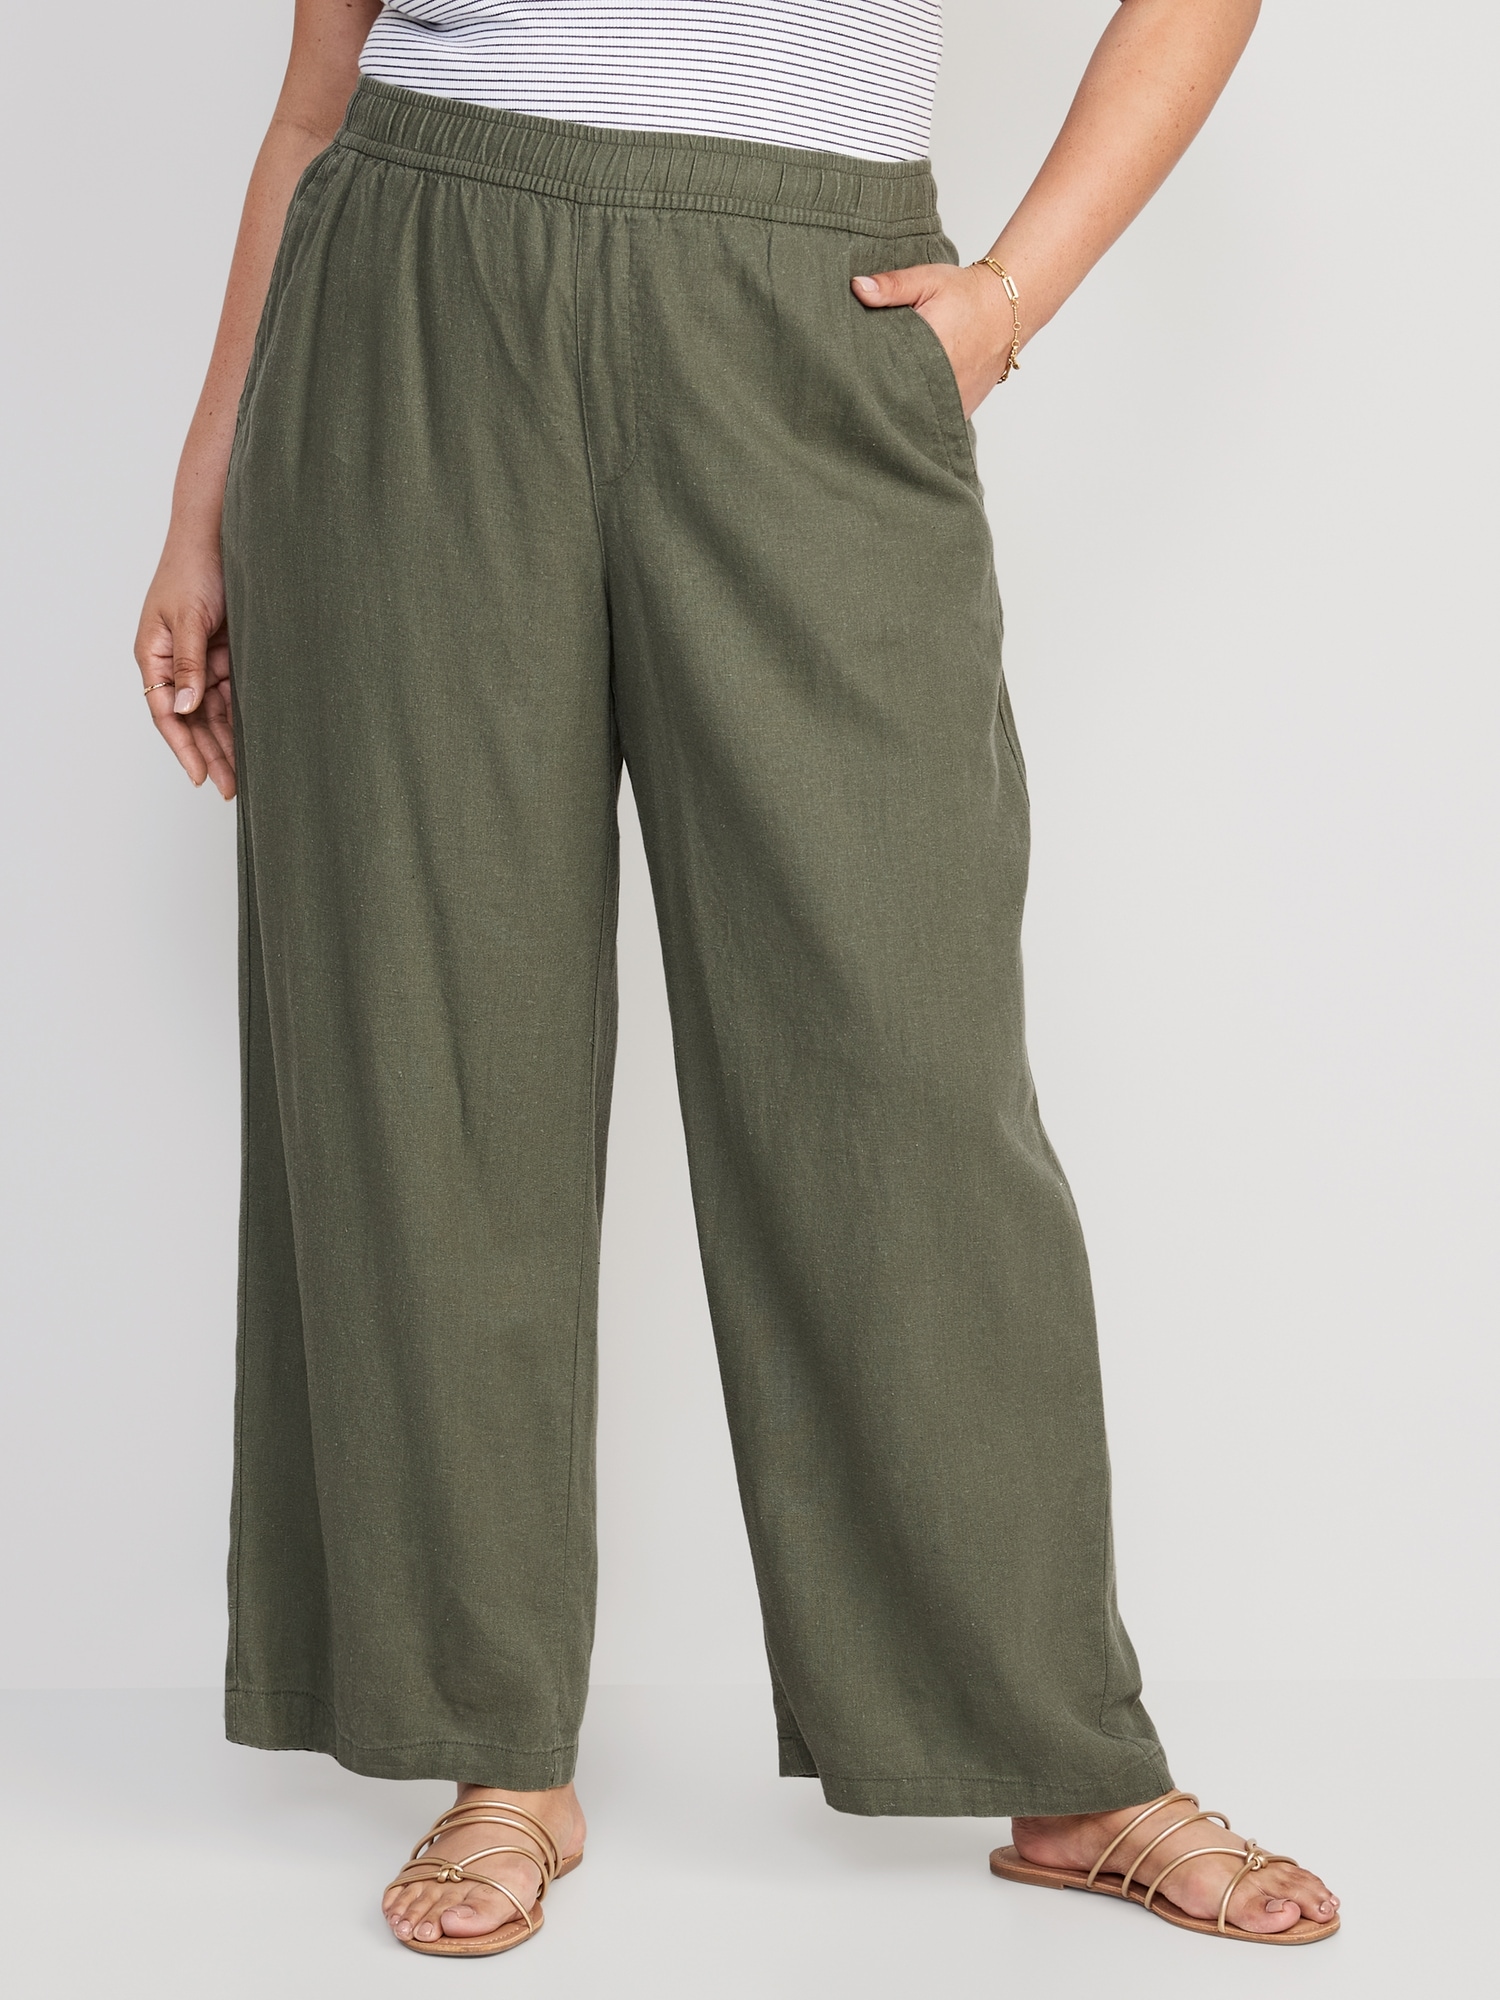 HOT* Old Navy: Women's Blend Linen Pants only $12!